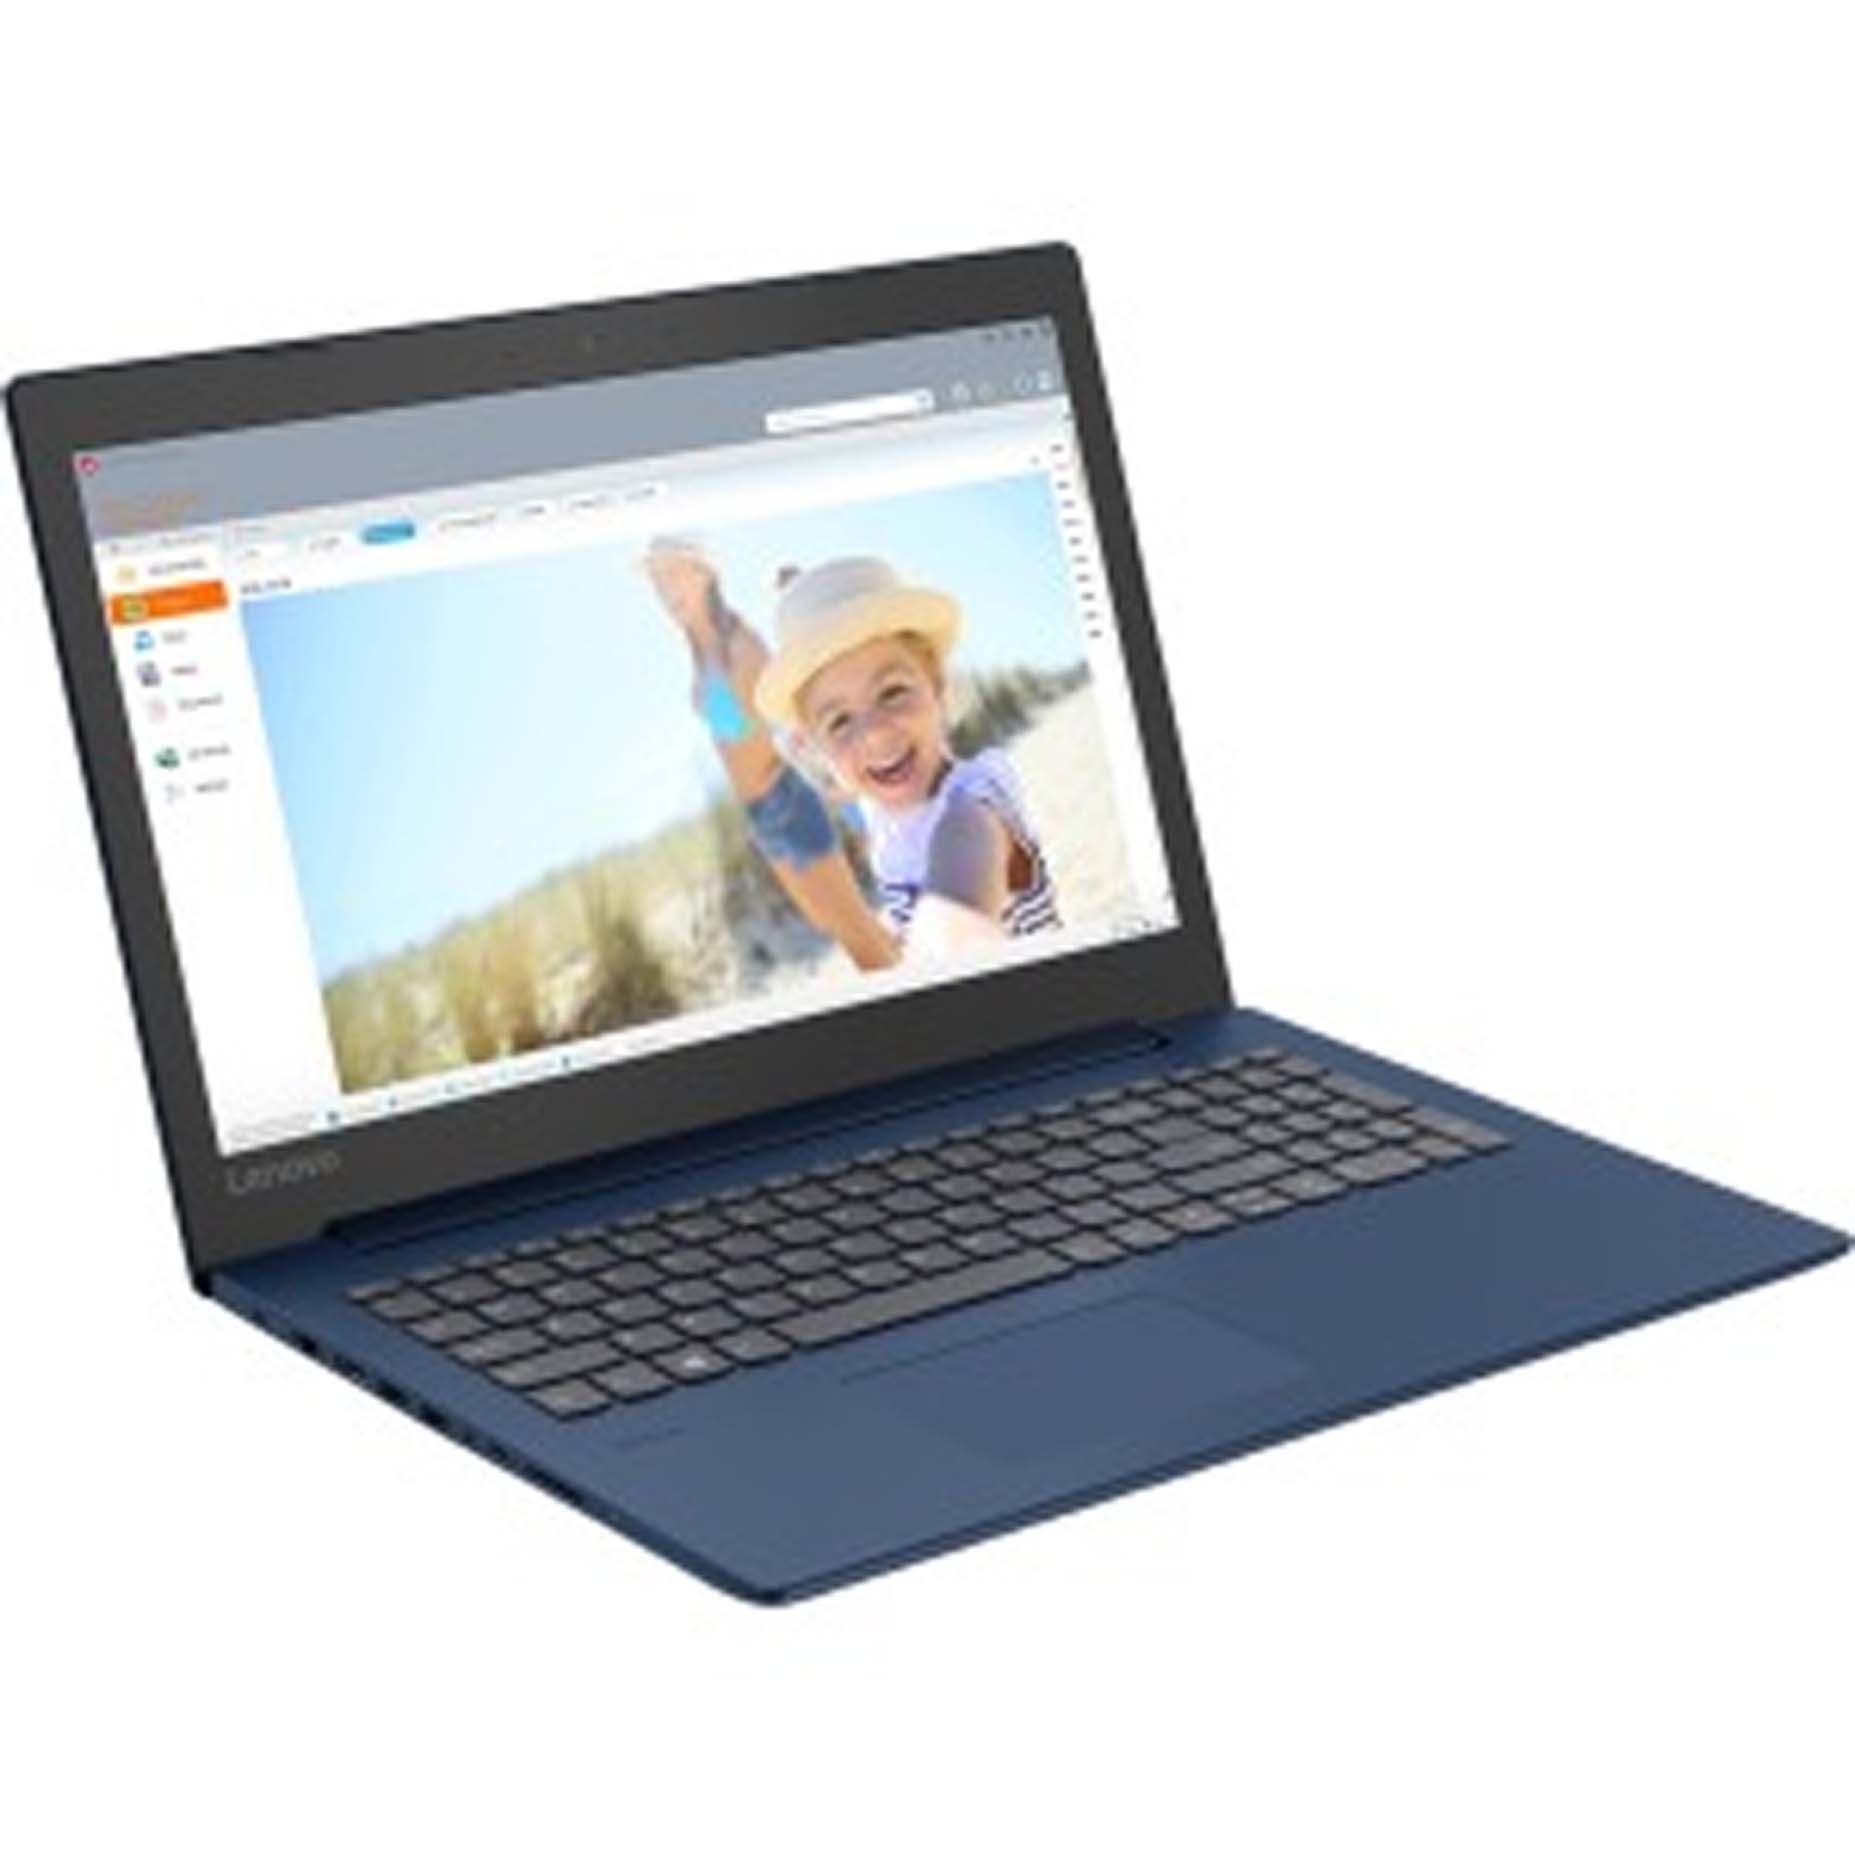 Harga Lenovo Ideapad IP330S-14IKB LTID Laptop Intel Core i7-8550U 8GB 2TB AMD Radeon 540 4GB Windows 10 14Inch Blue